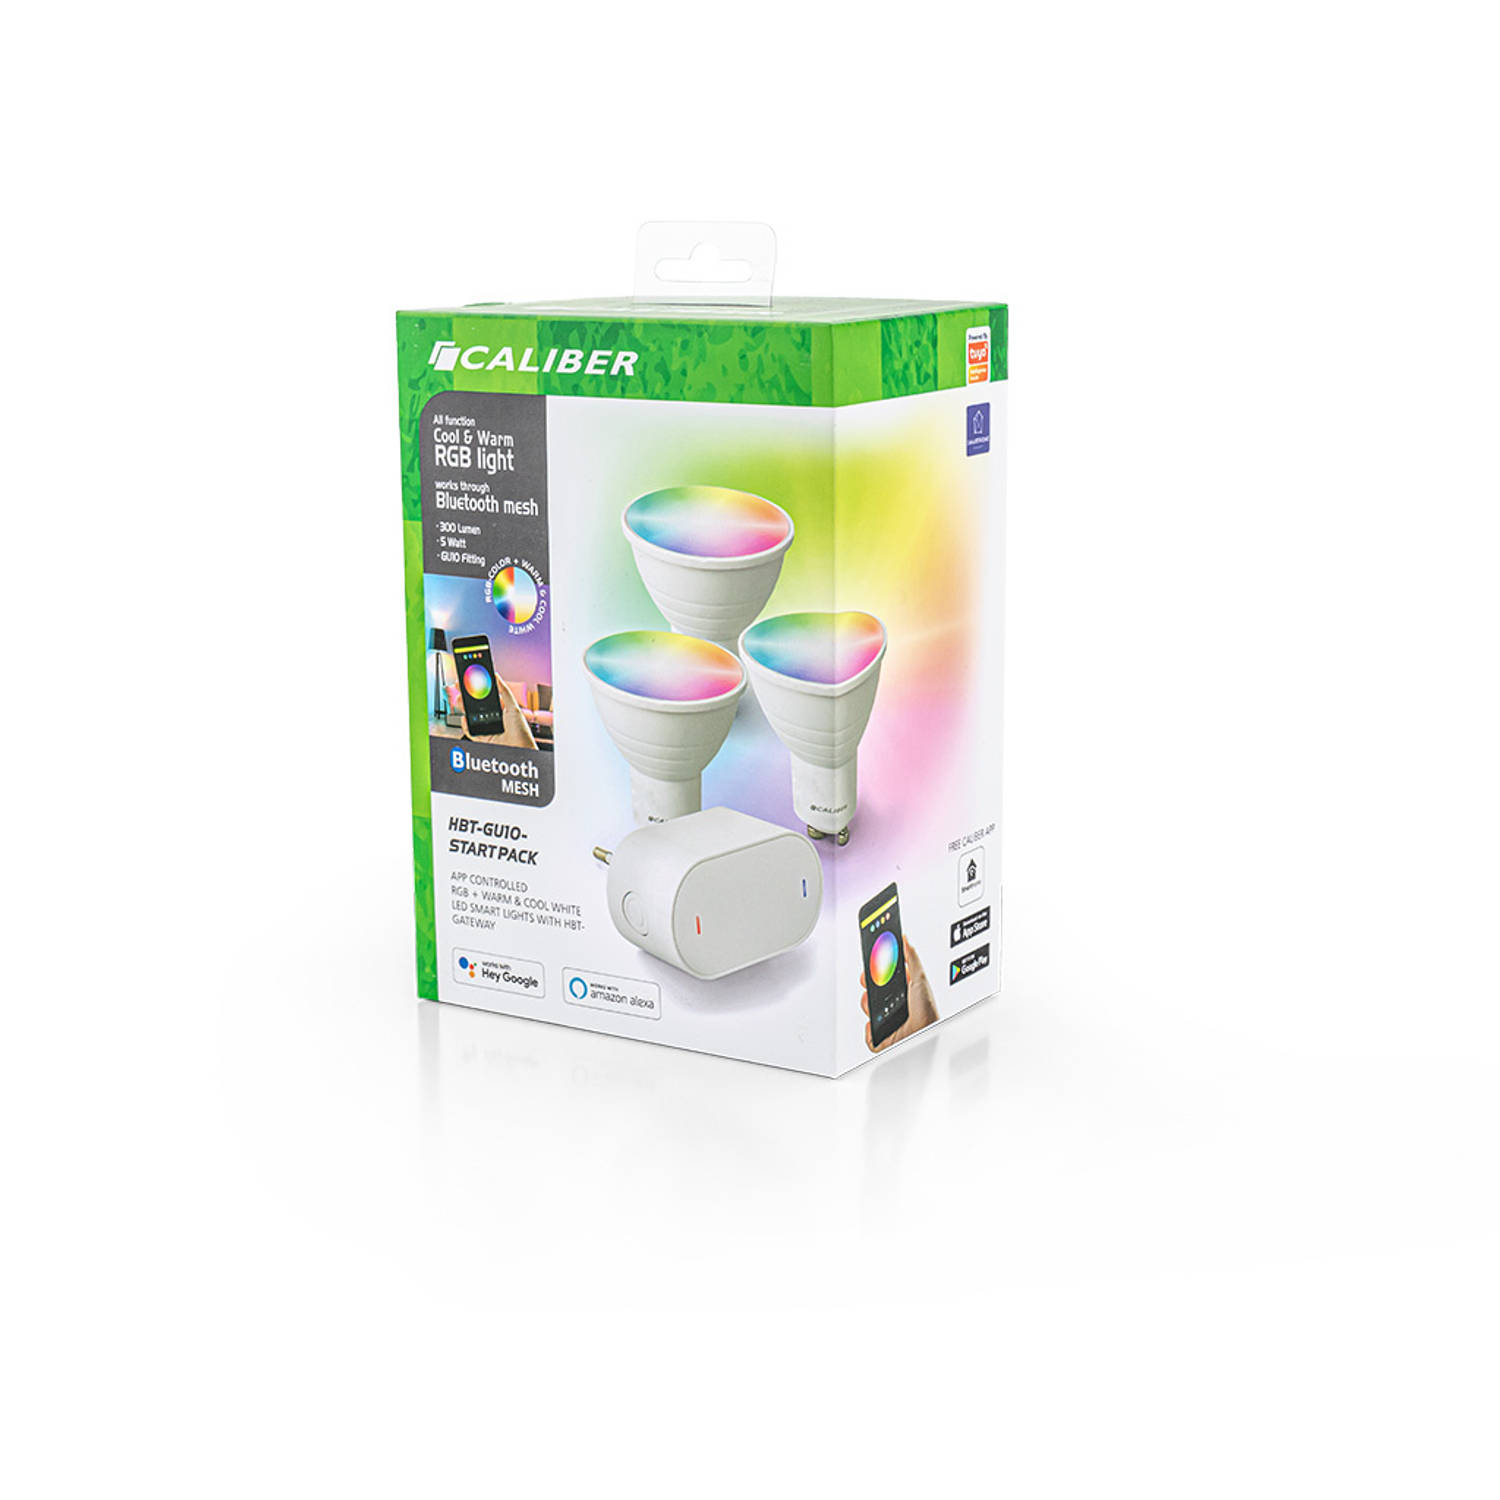 Caliber Slimme lamp - Starterspakket - GU10 - RGB en Wit kleuren (HBT-GU10-STARTPACK)